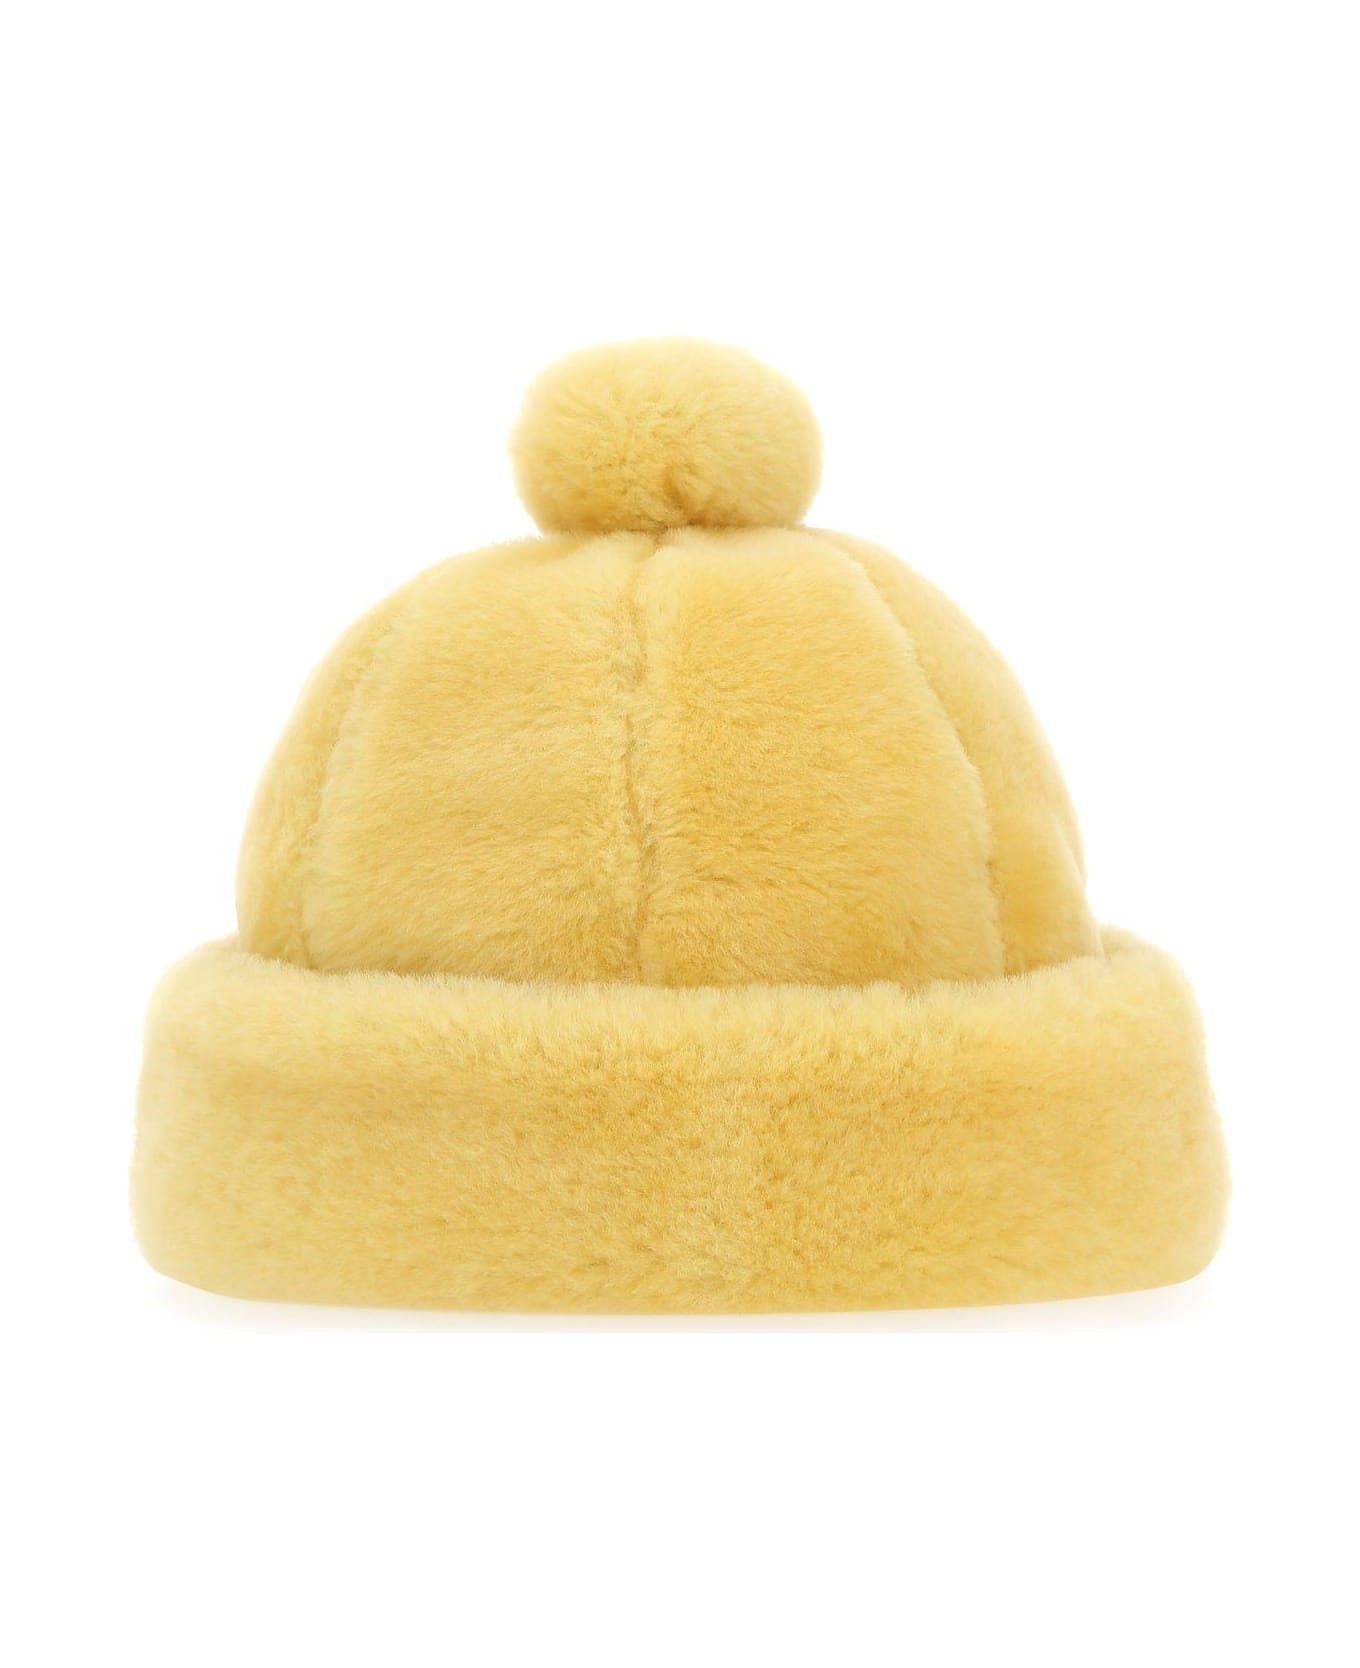 Lanvin Pastel Yellow Shearling Beanie Hat - YELLOW